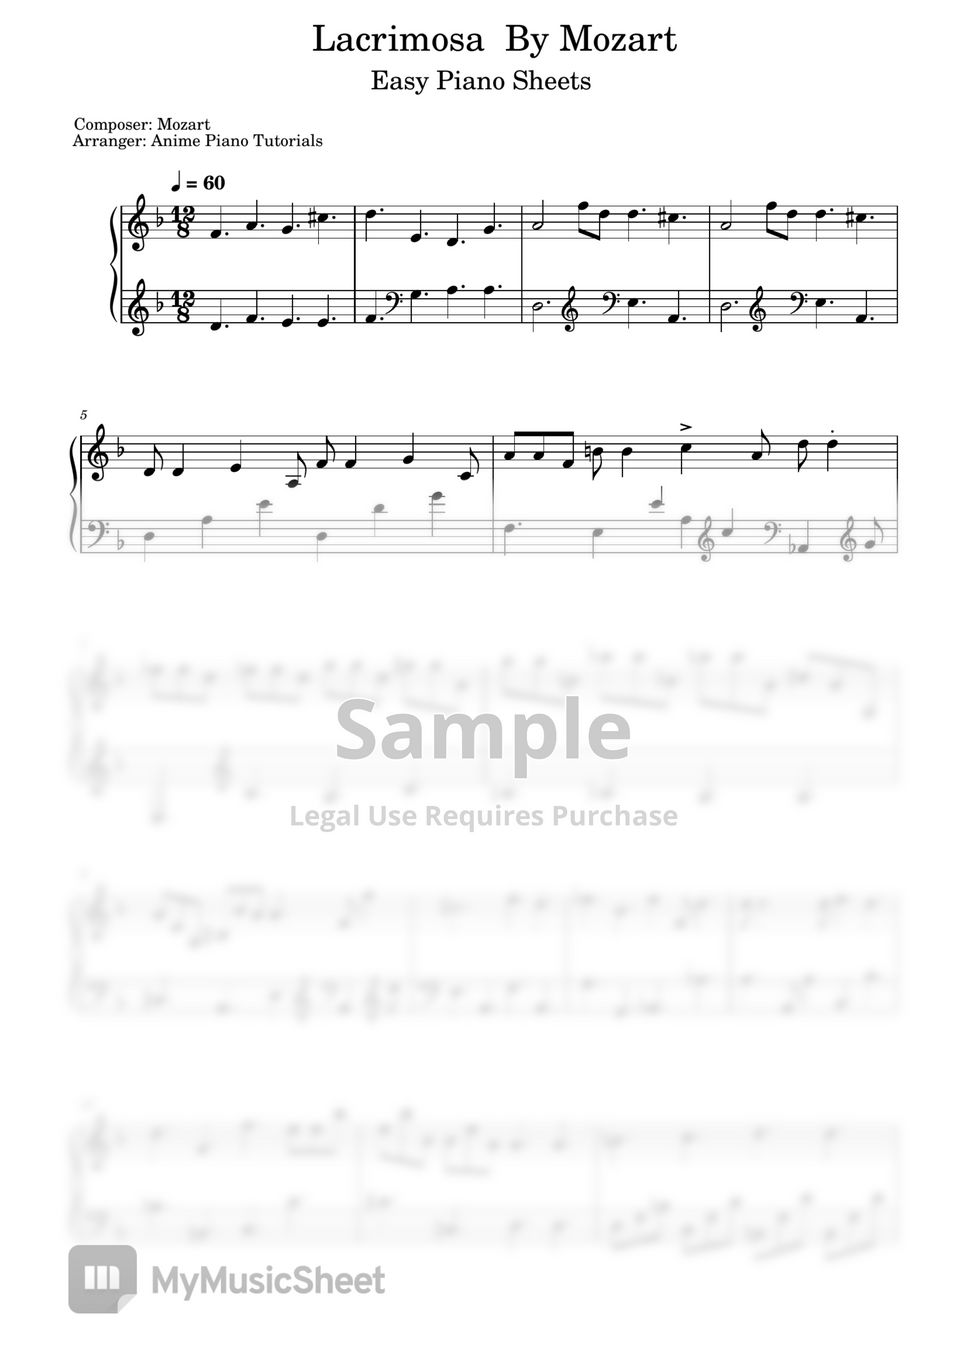 Mozart - Lacrimosa (EASY) Sheets by Anime Piano Tutorials